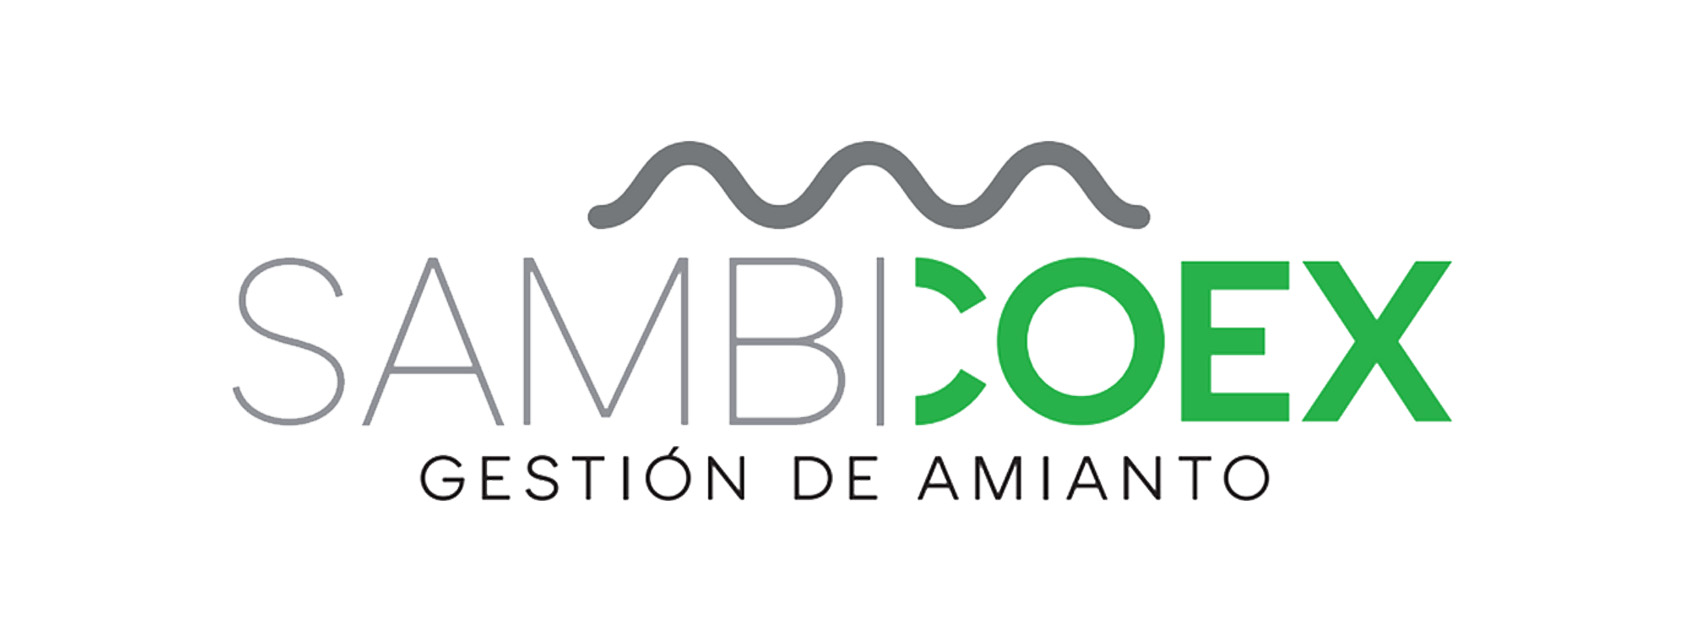 logo-sambicoex